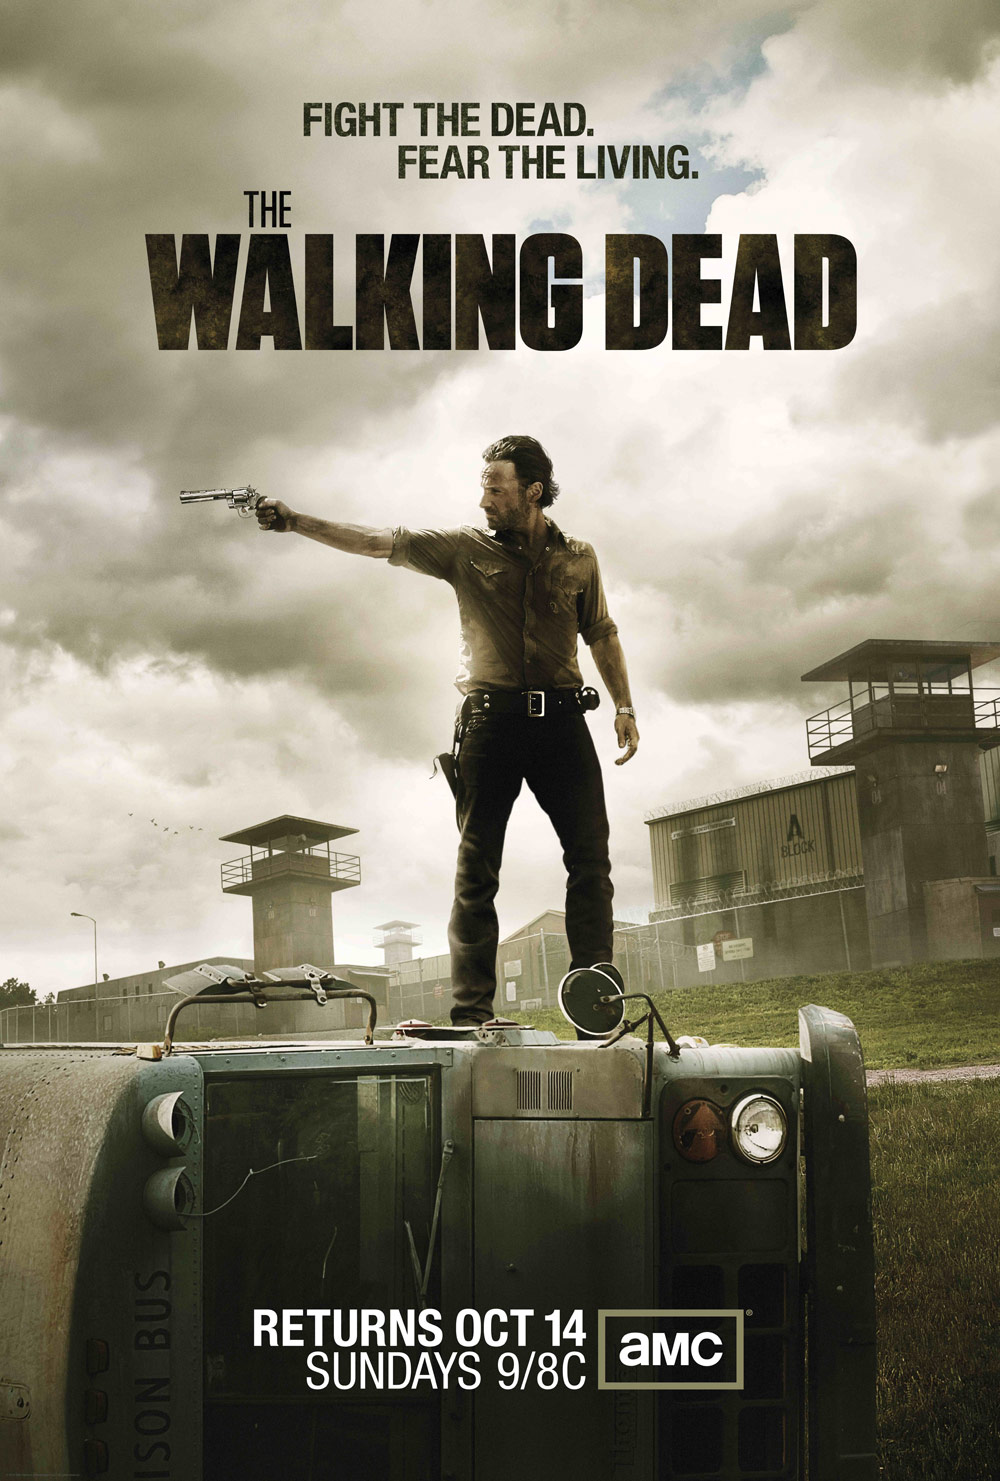 High resolution The Walking Dead Season 3 poster wallpaper size